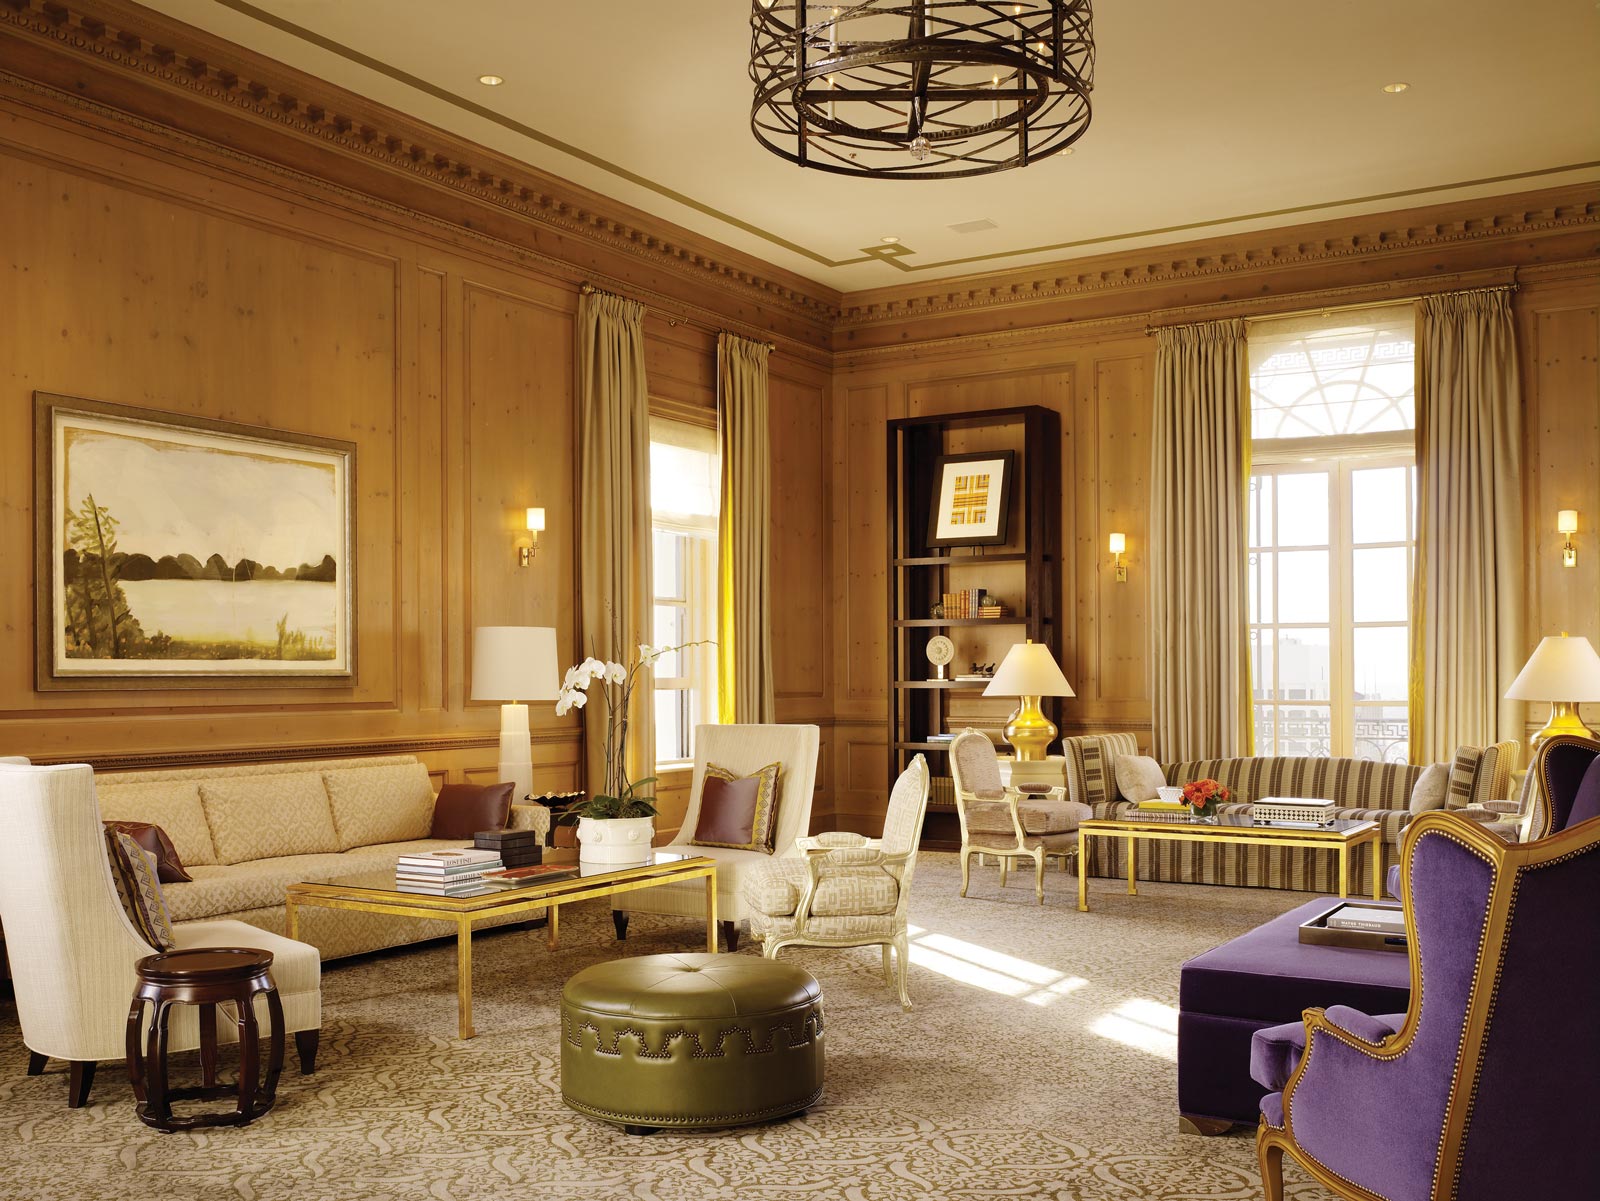 Presidential Suite, Fairmont Hotel - Jonathan Plumpton Lighting Design